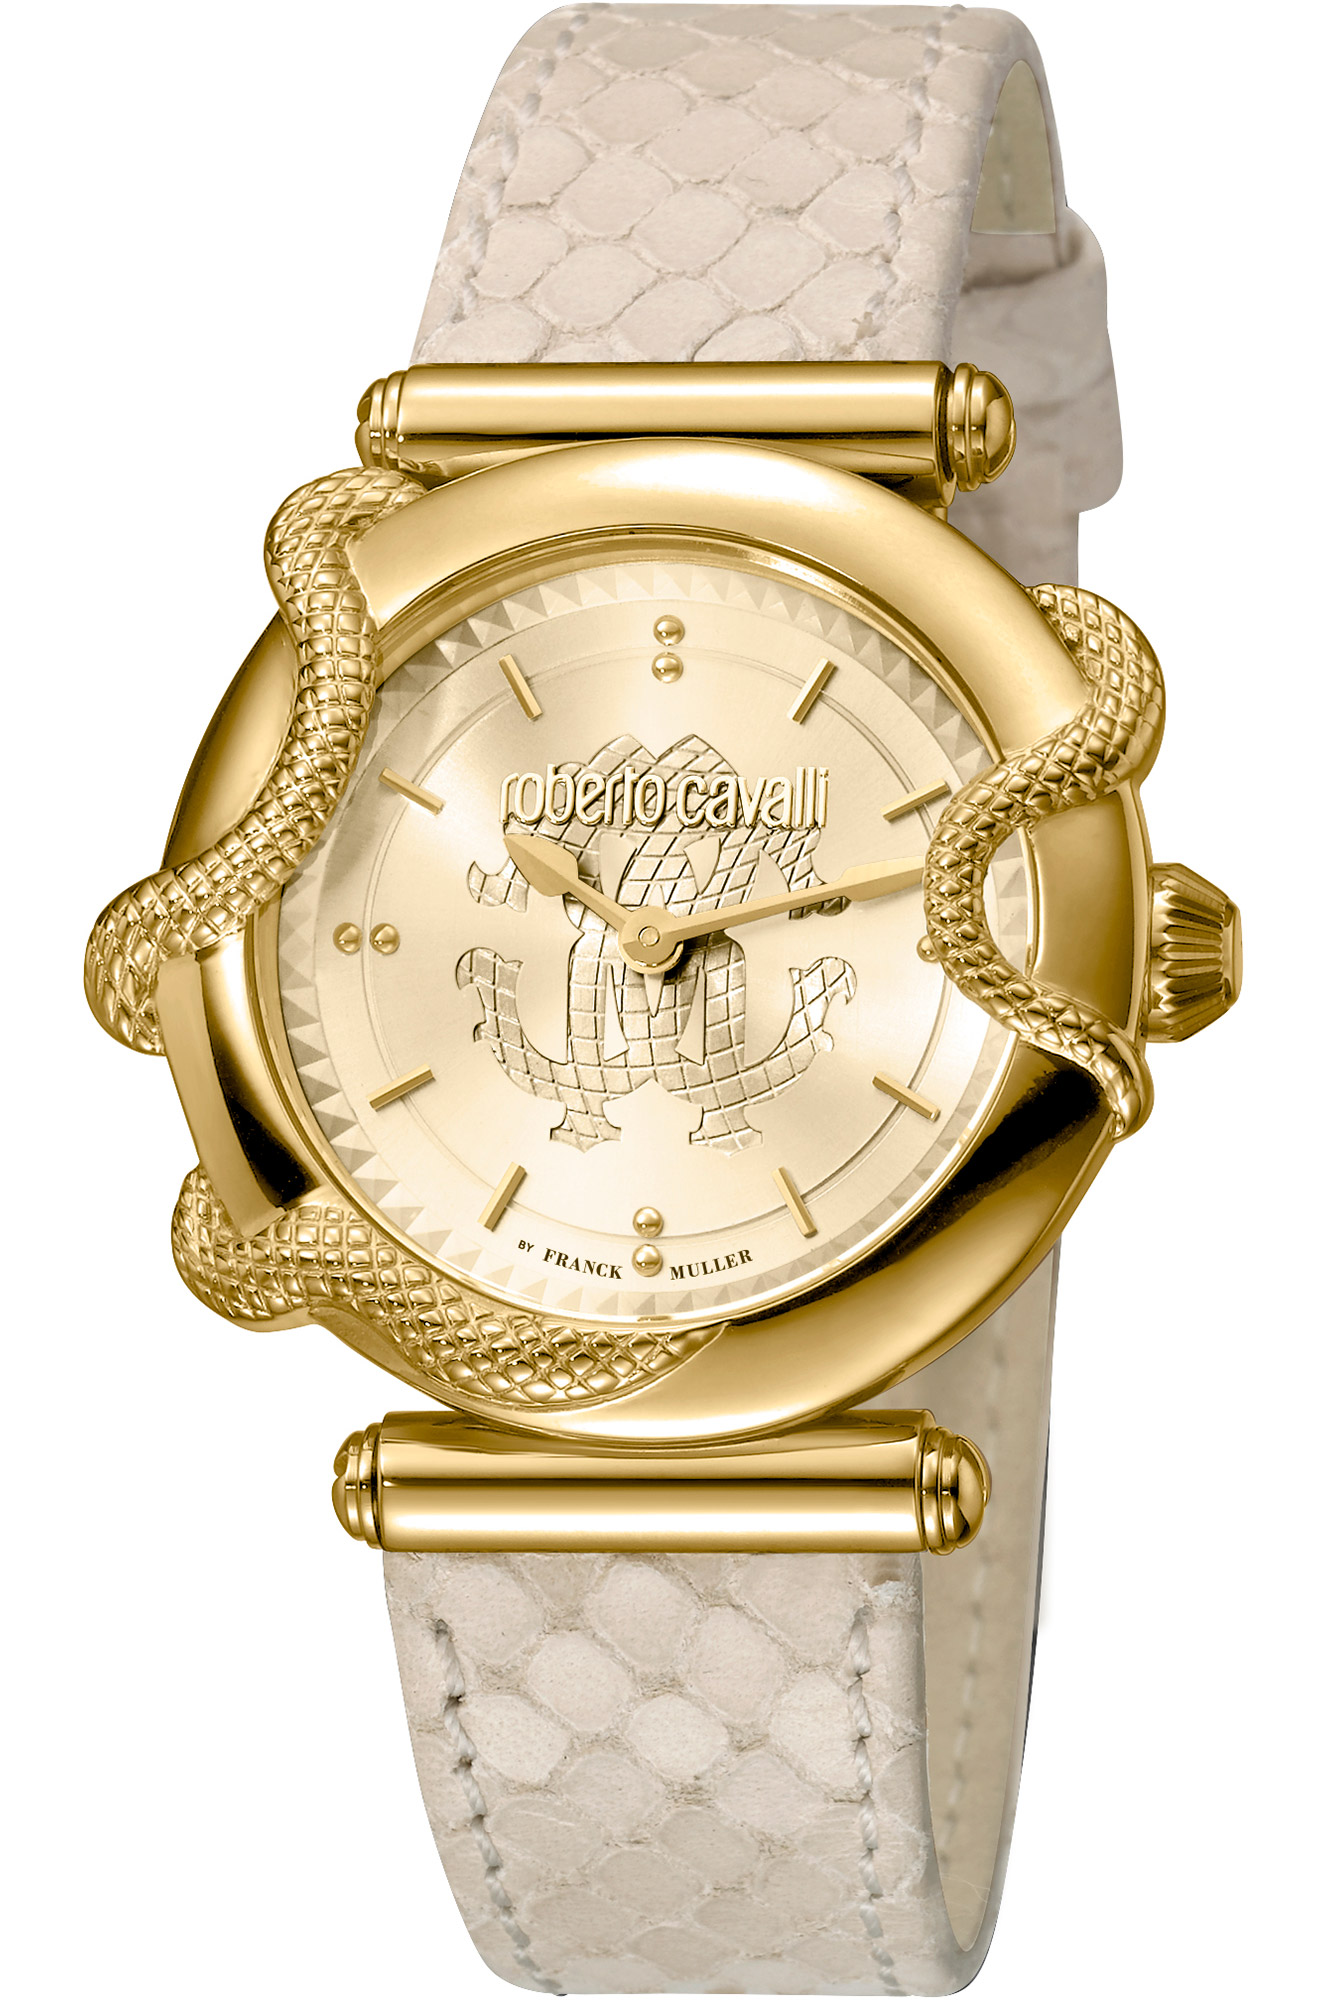 Reloj Roberto Cavalli by Franck Muller rv1l058l0031